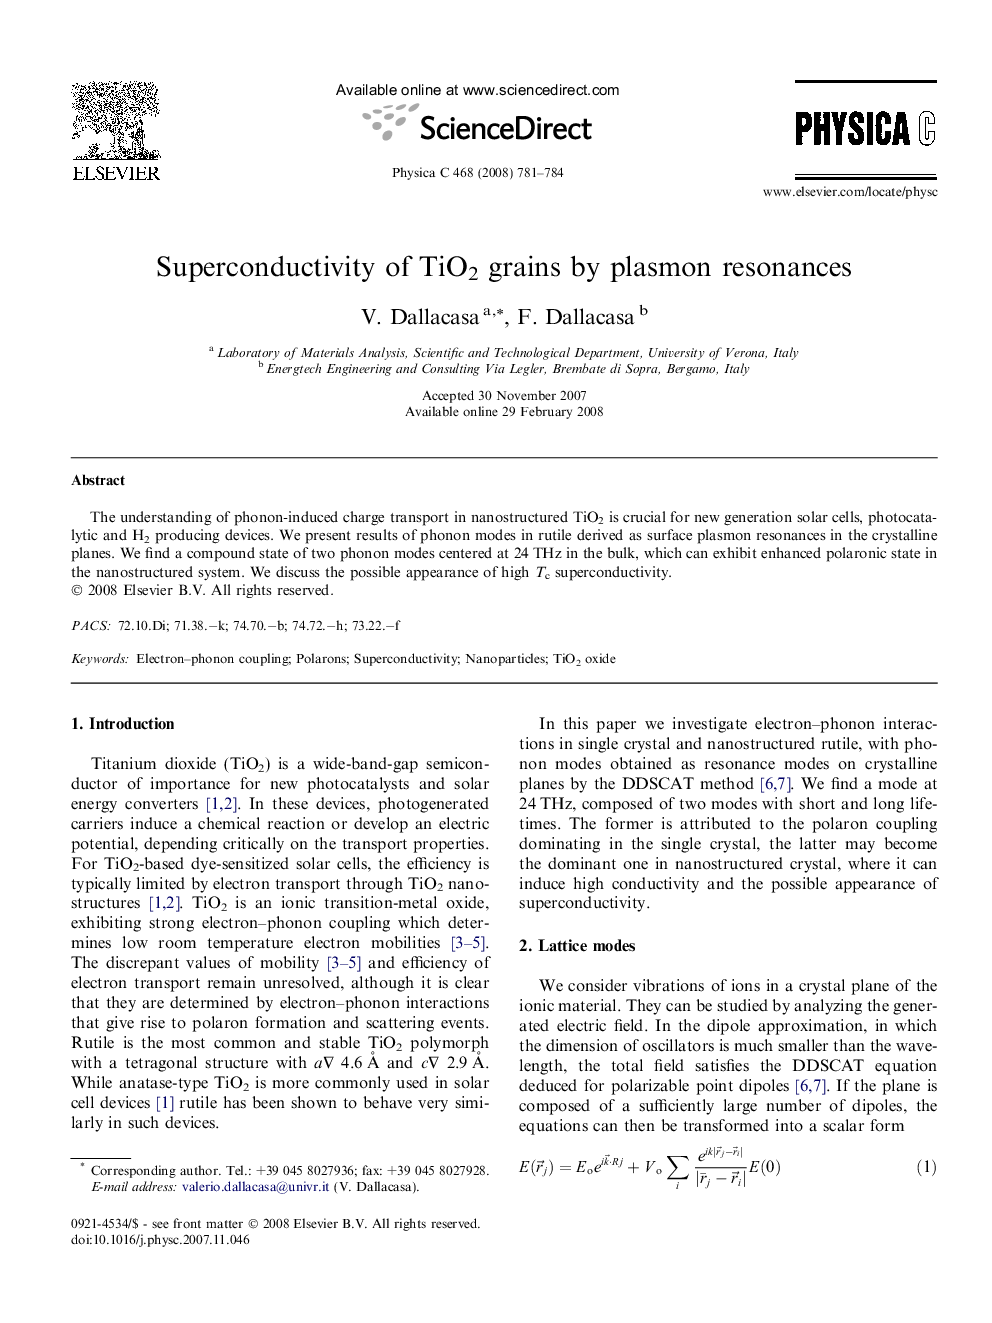 Superconductivity of TiO2 grains by plasmon resonances